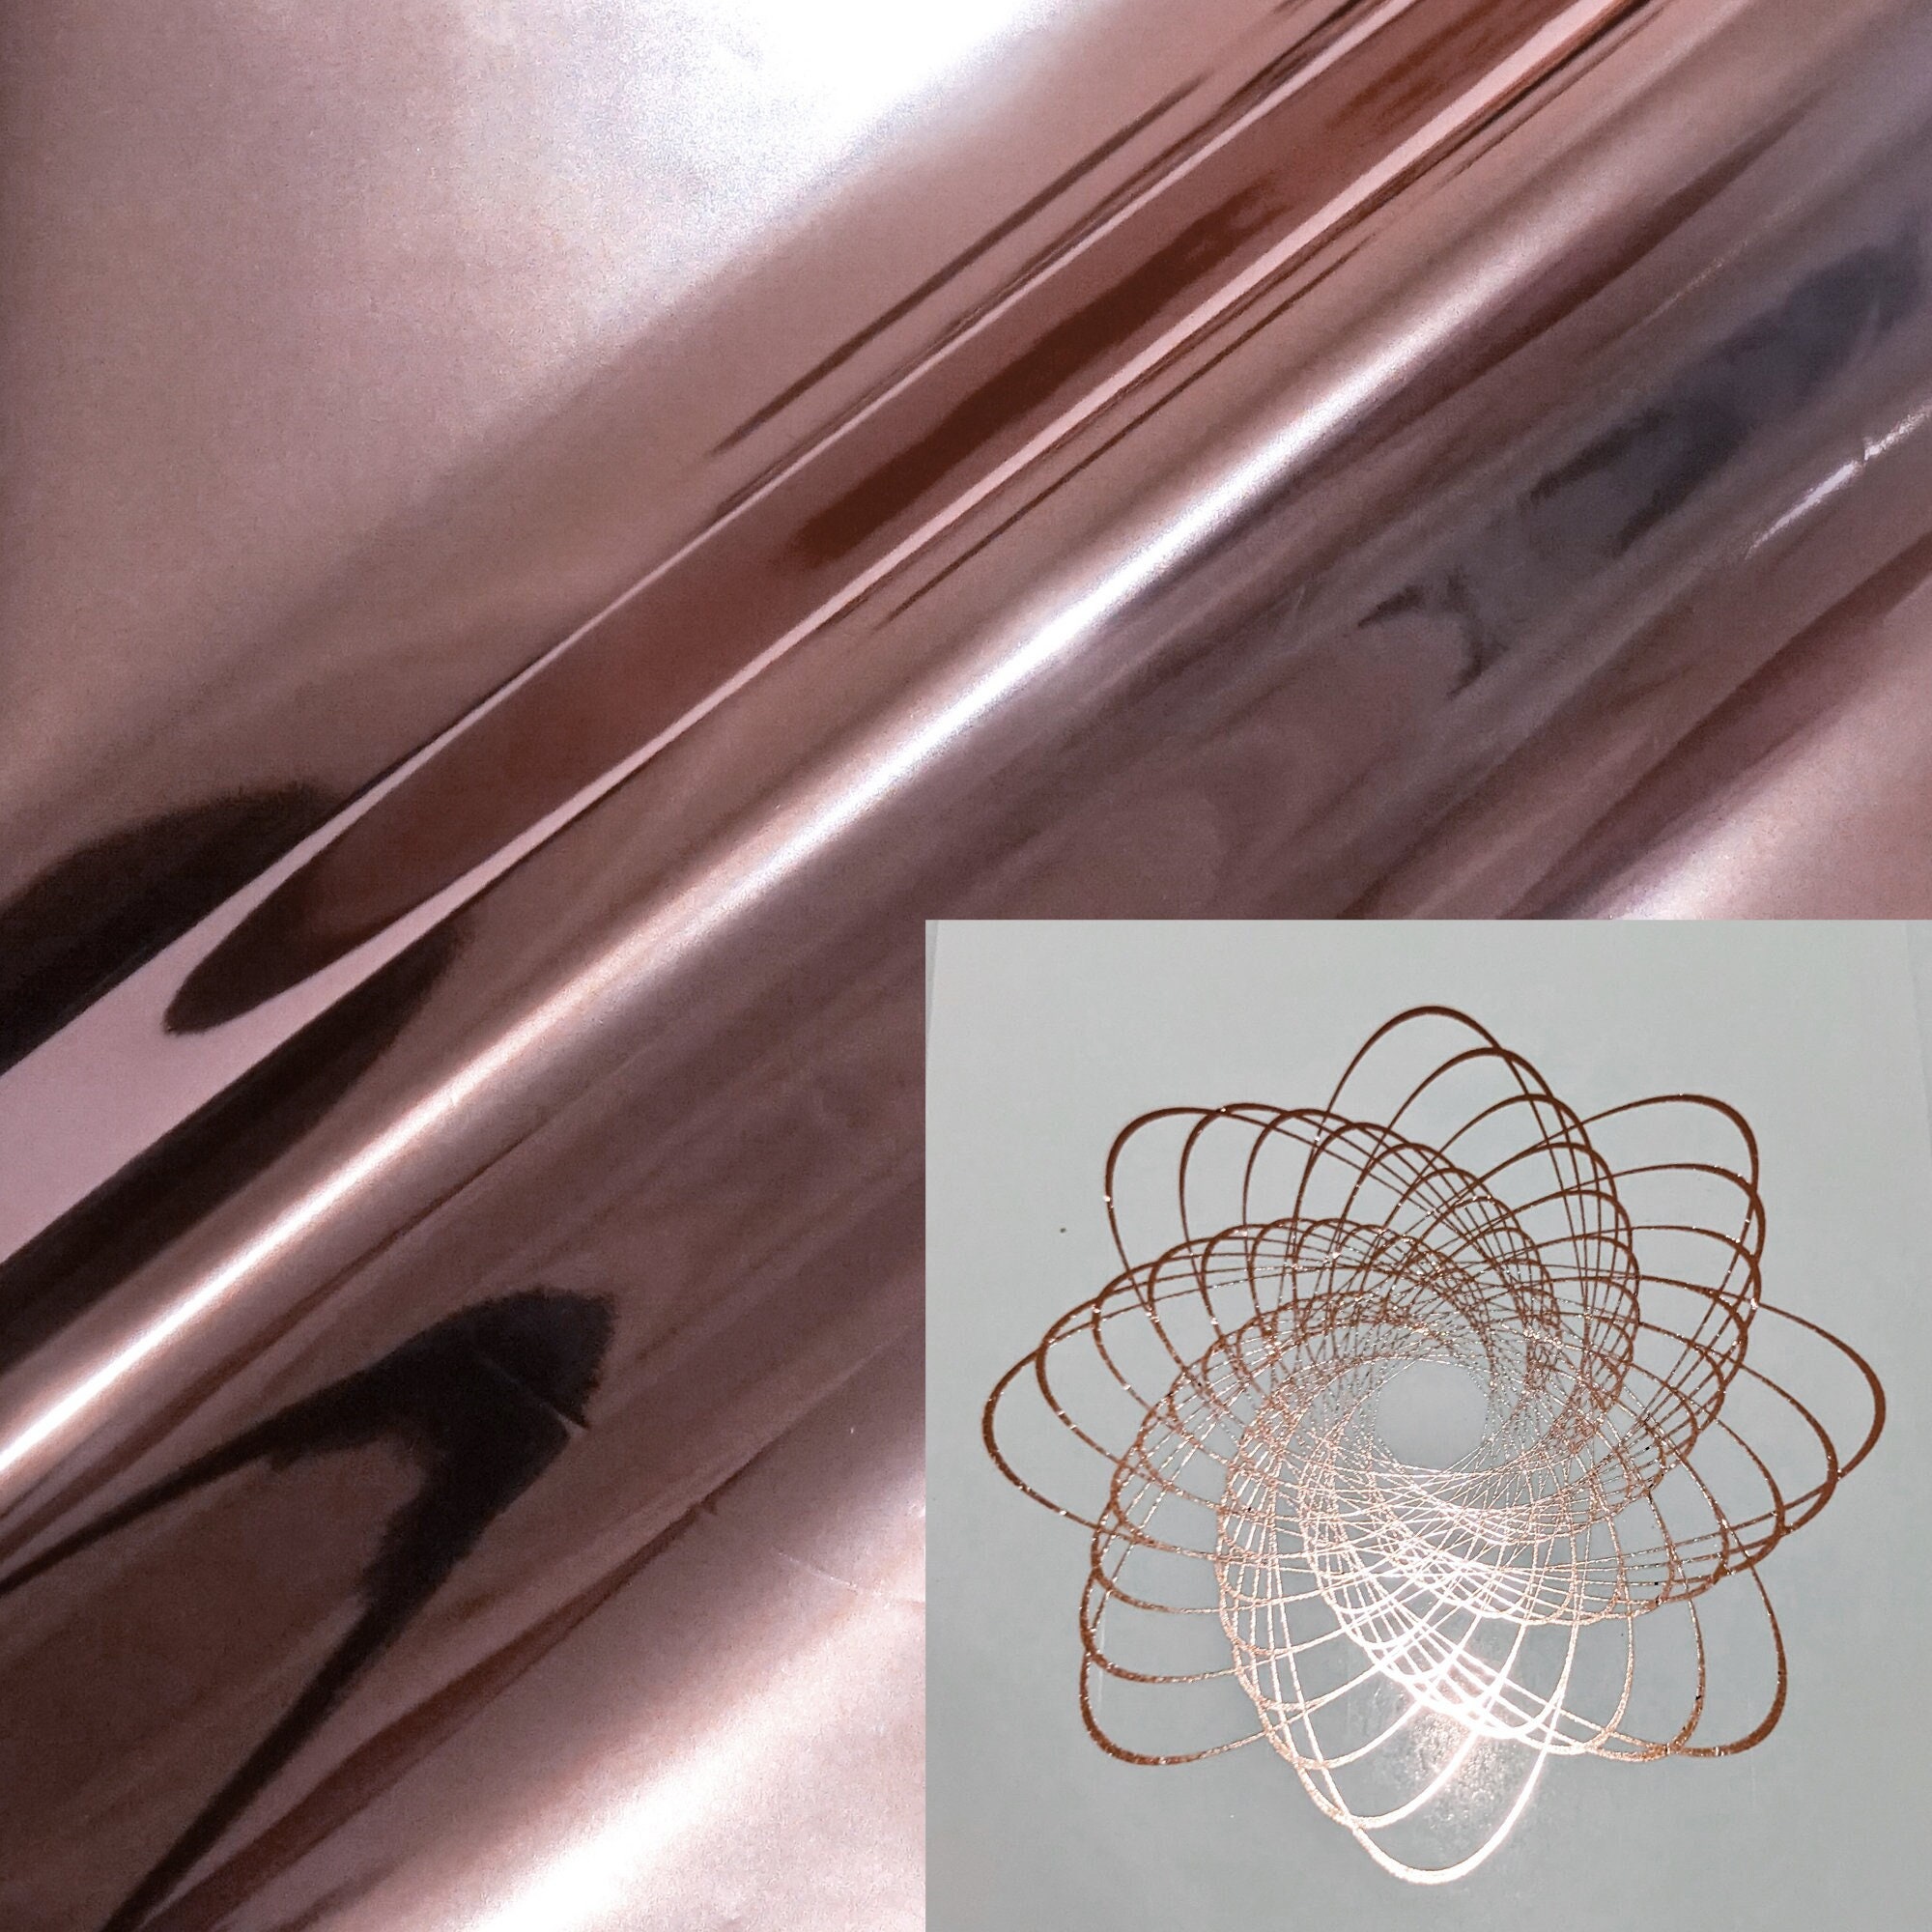 Matte Gold Soft Metallic 12 x 500' Laminating / Toner Fusing Foil - 2